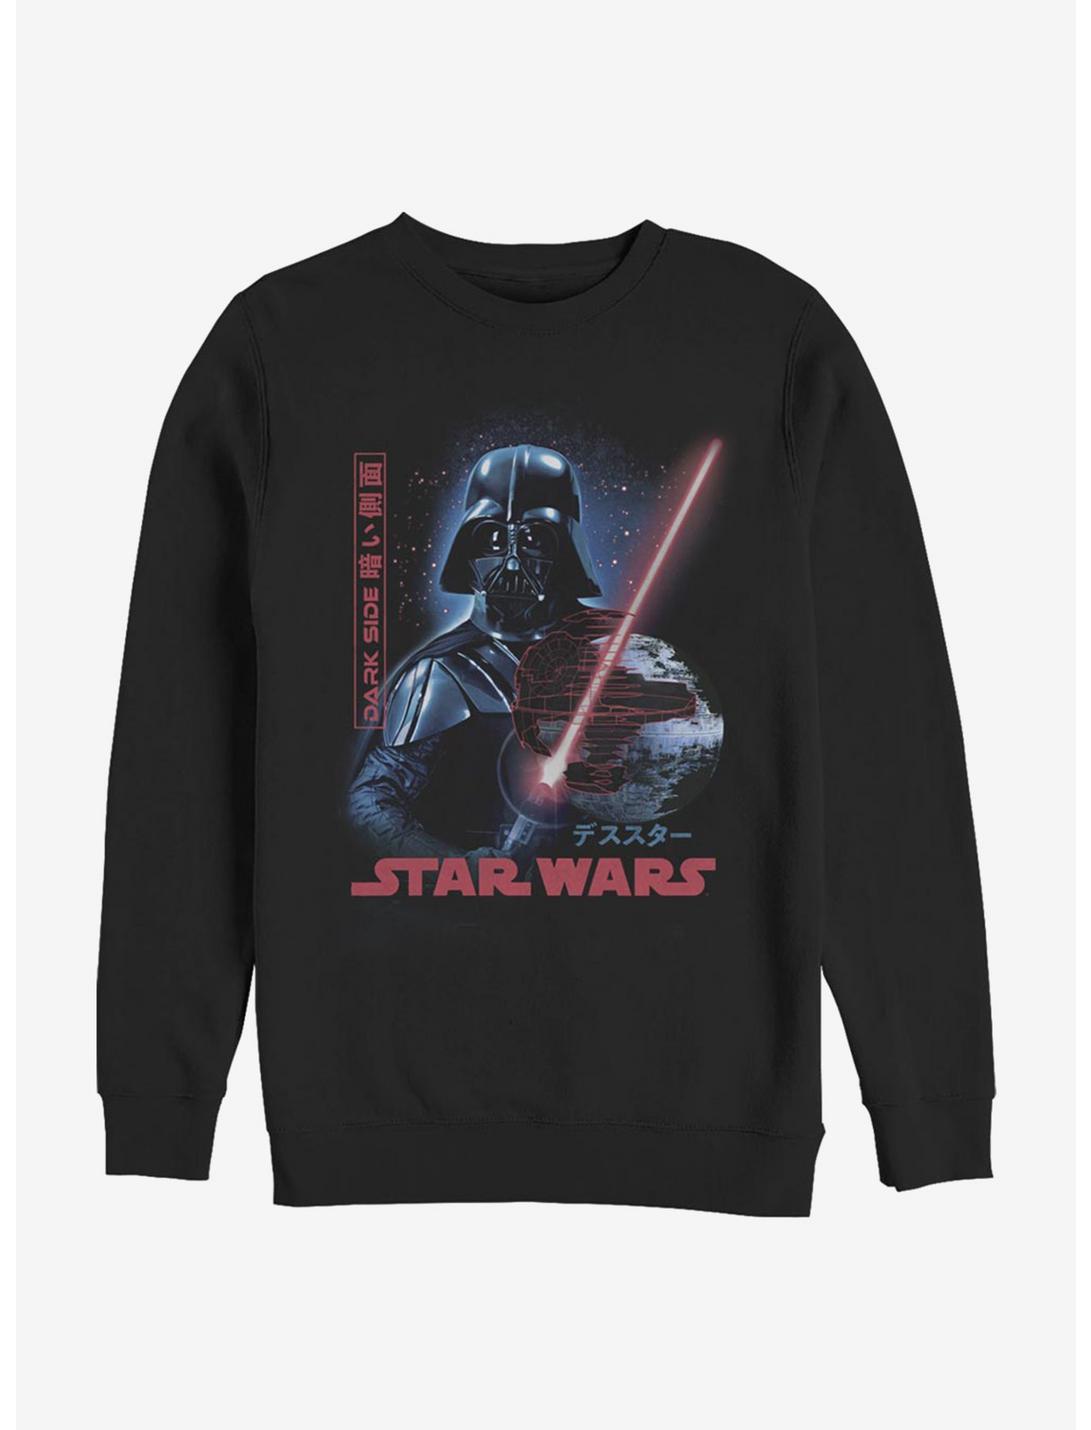 Star Wars Darth Vader Empire Japanese Text Sweatshirt, BLACK, hi-res